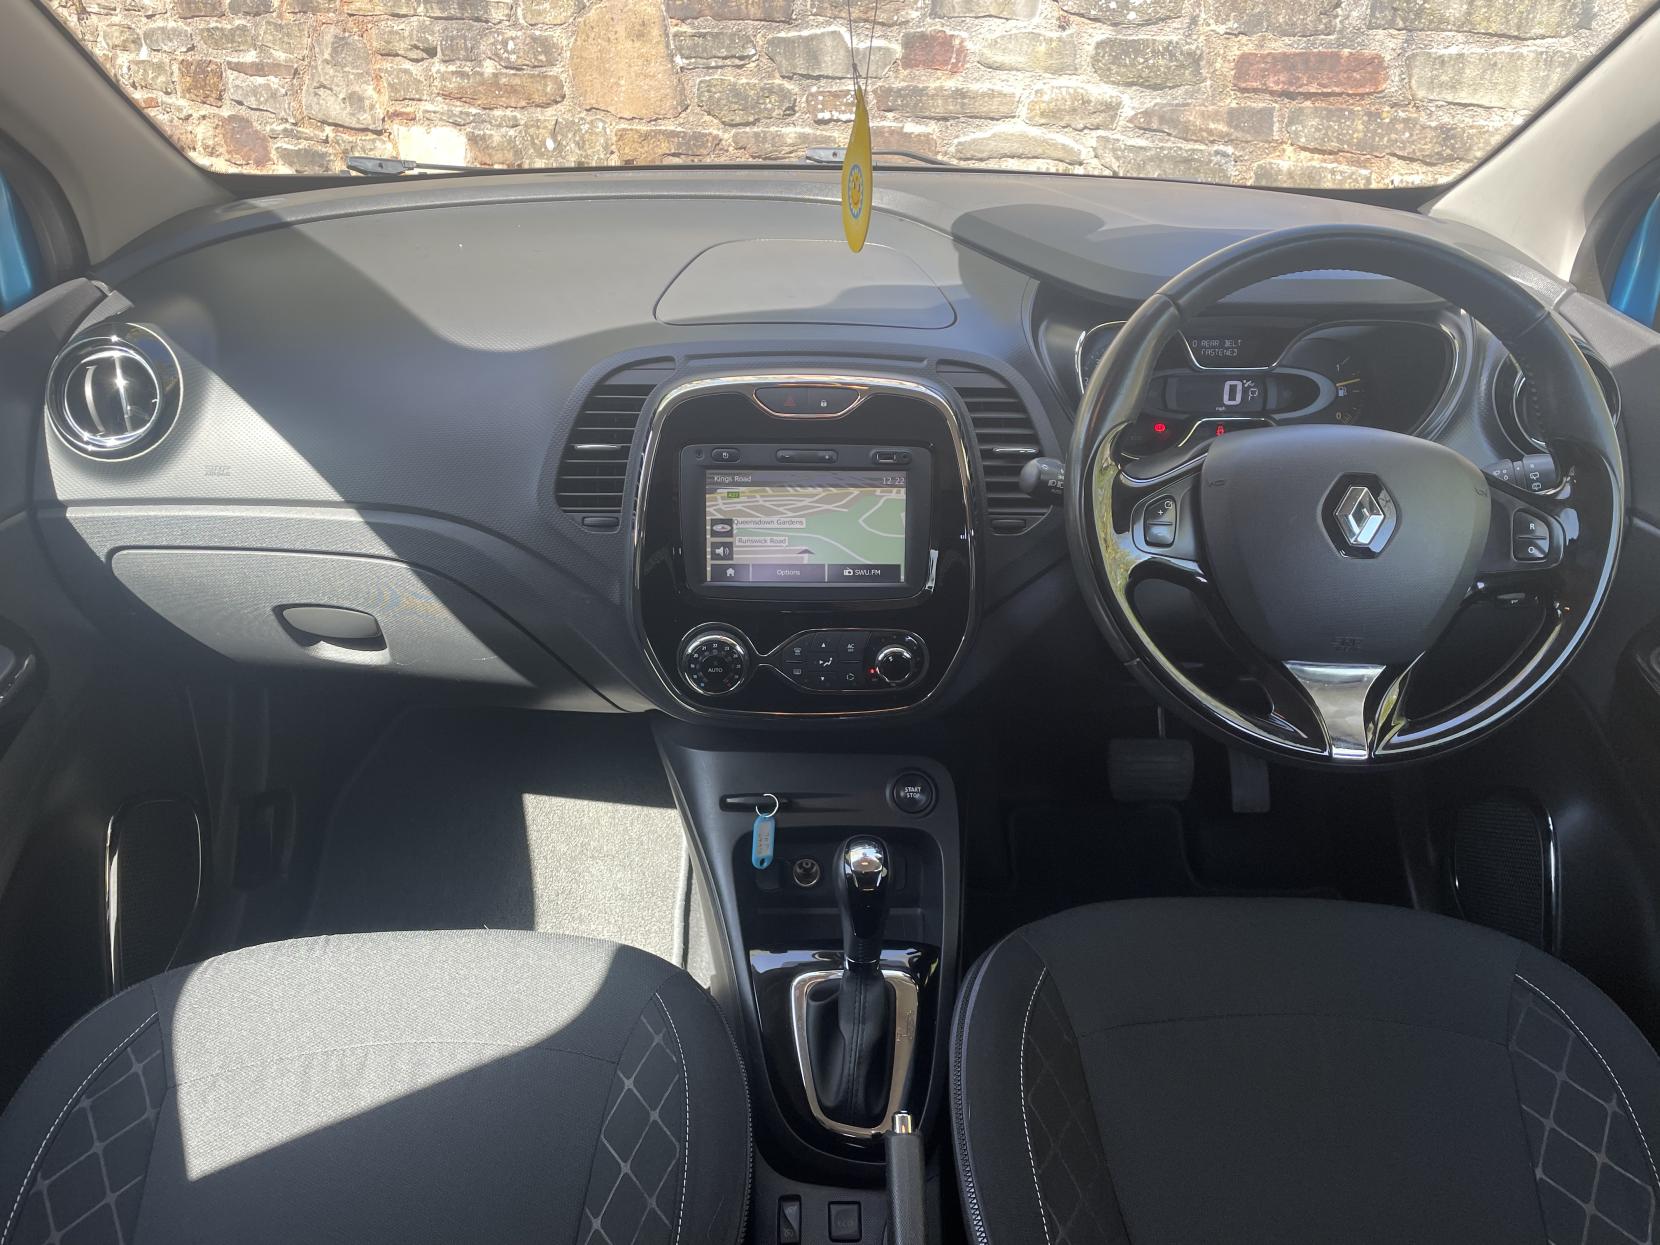 Renault Captur 1.5 dCi Dynamique S MediaNav SUV 5dr Diesel EDC Euro 5 (90 ps)